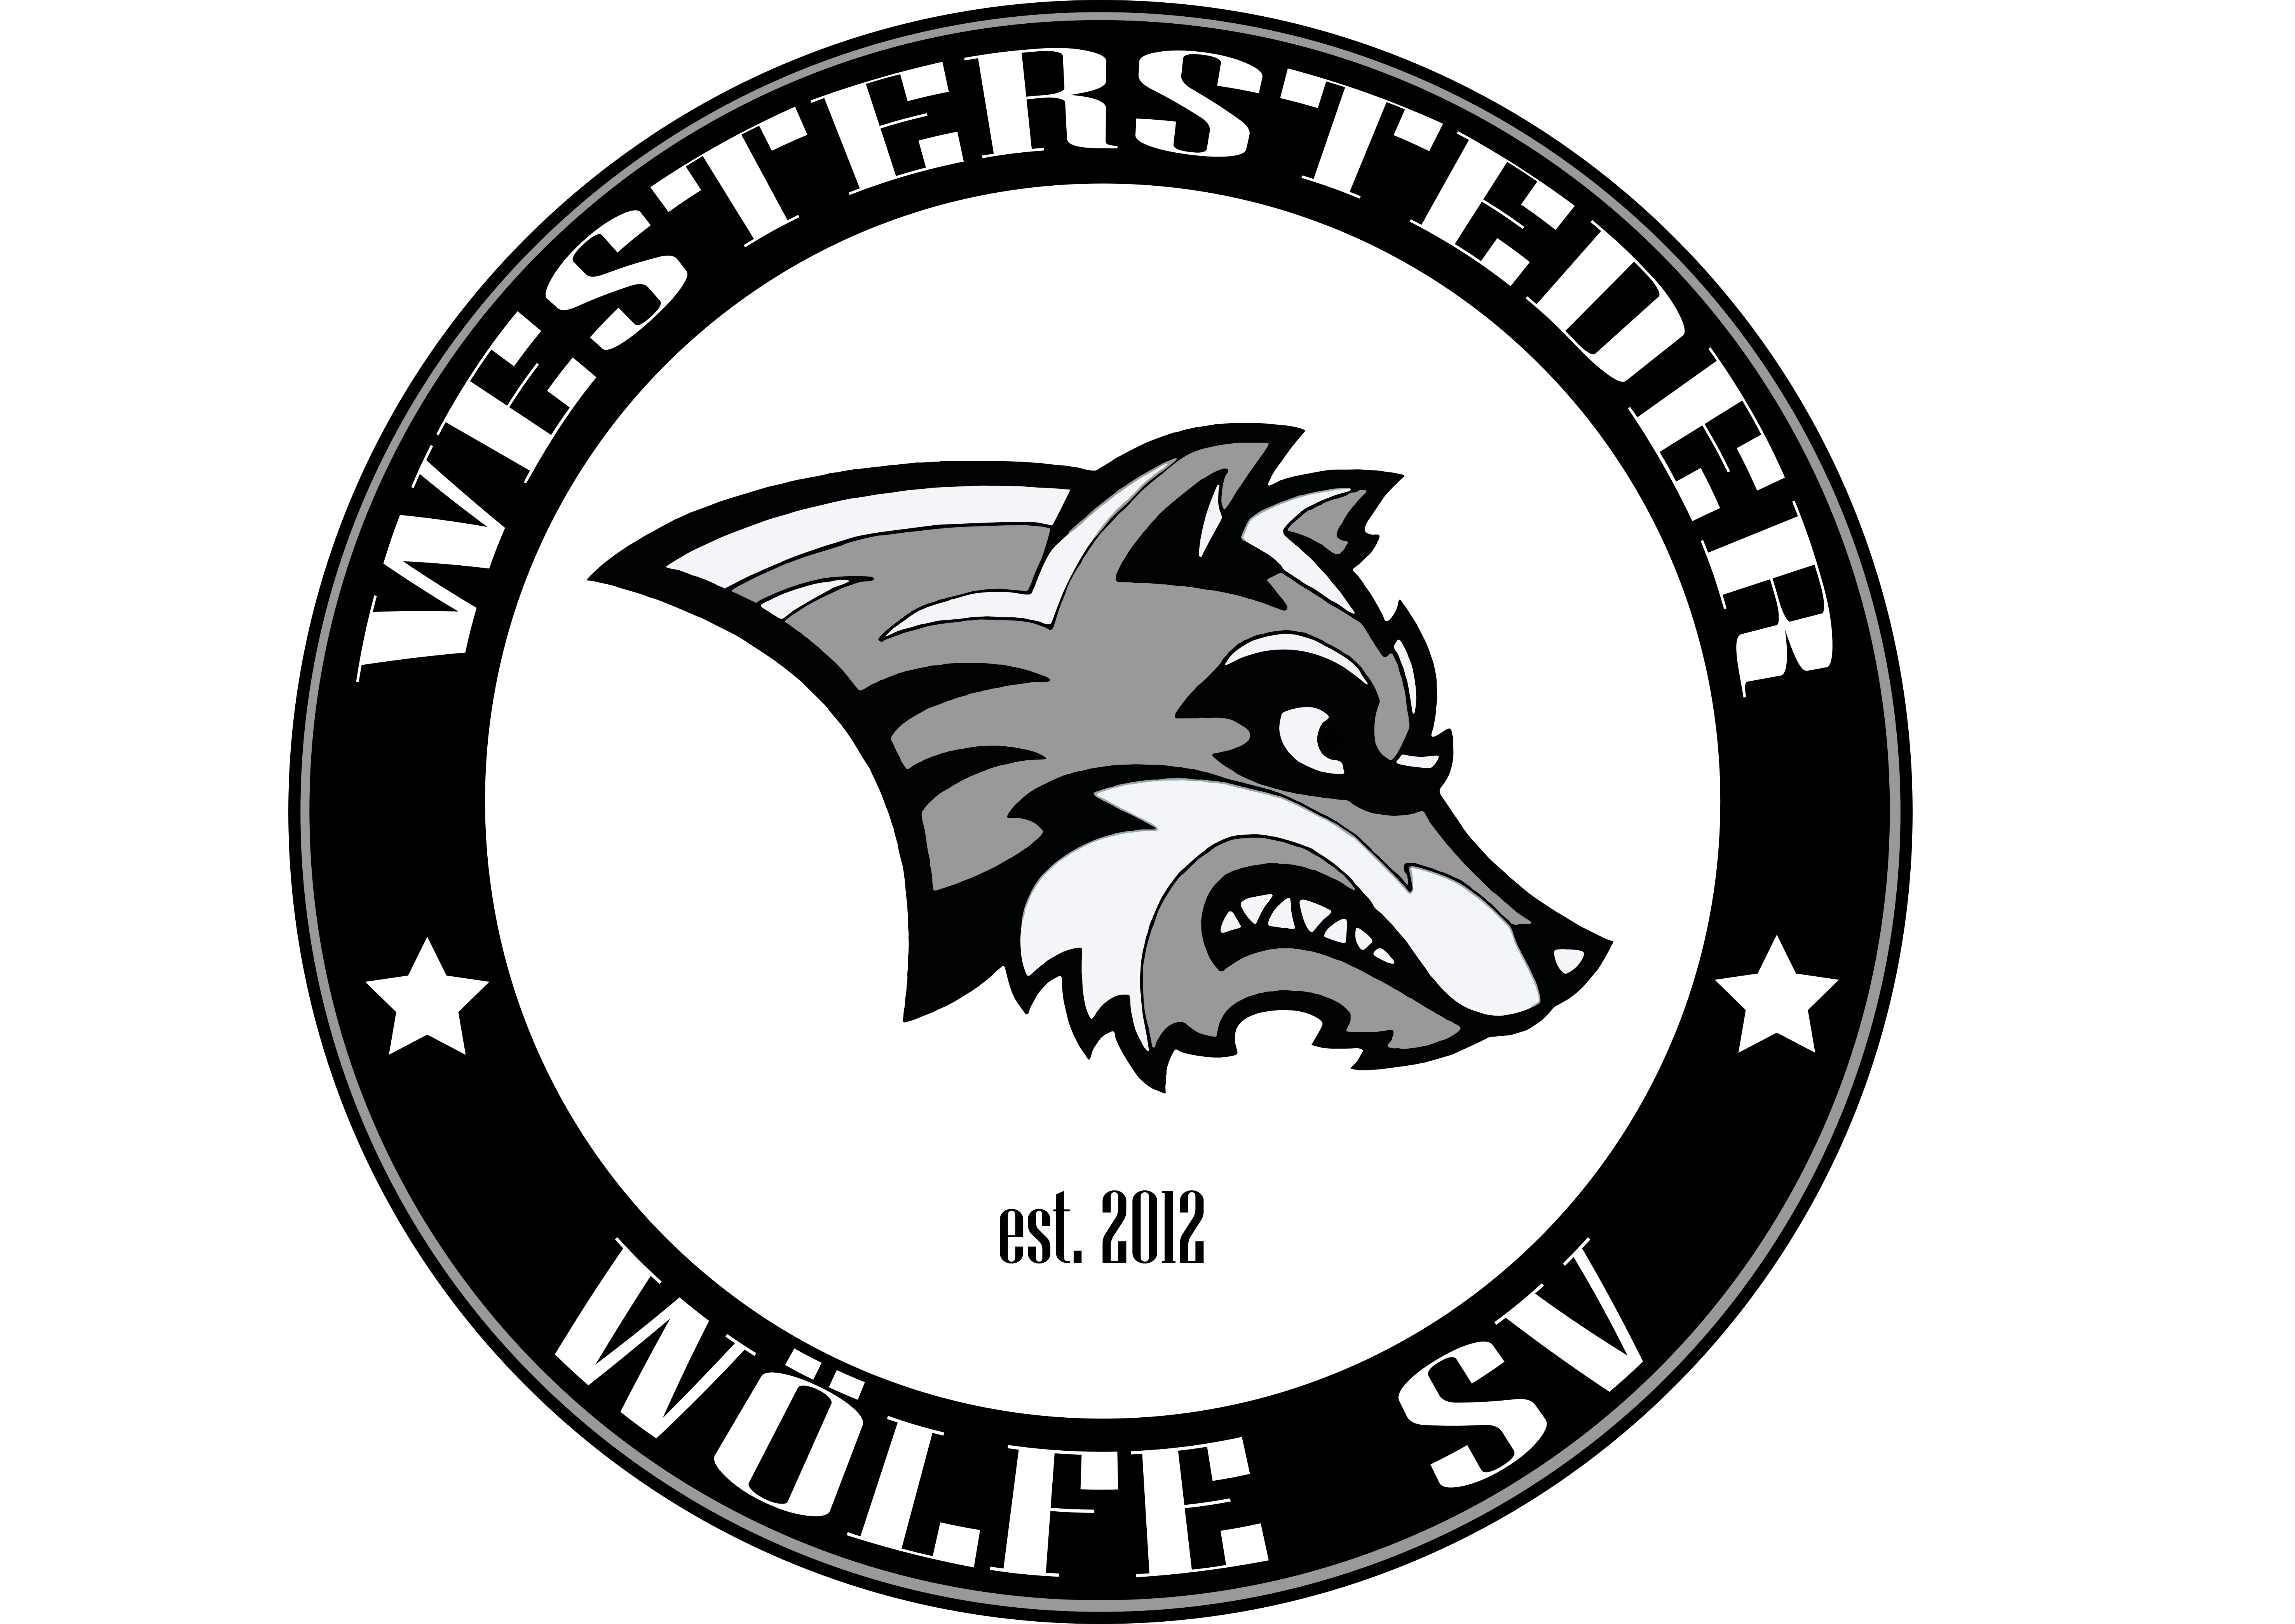 Westersteder Wölfe